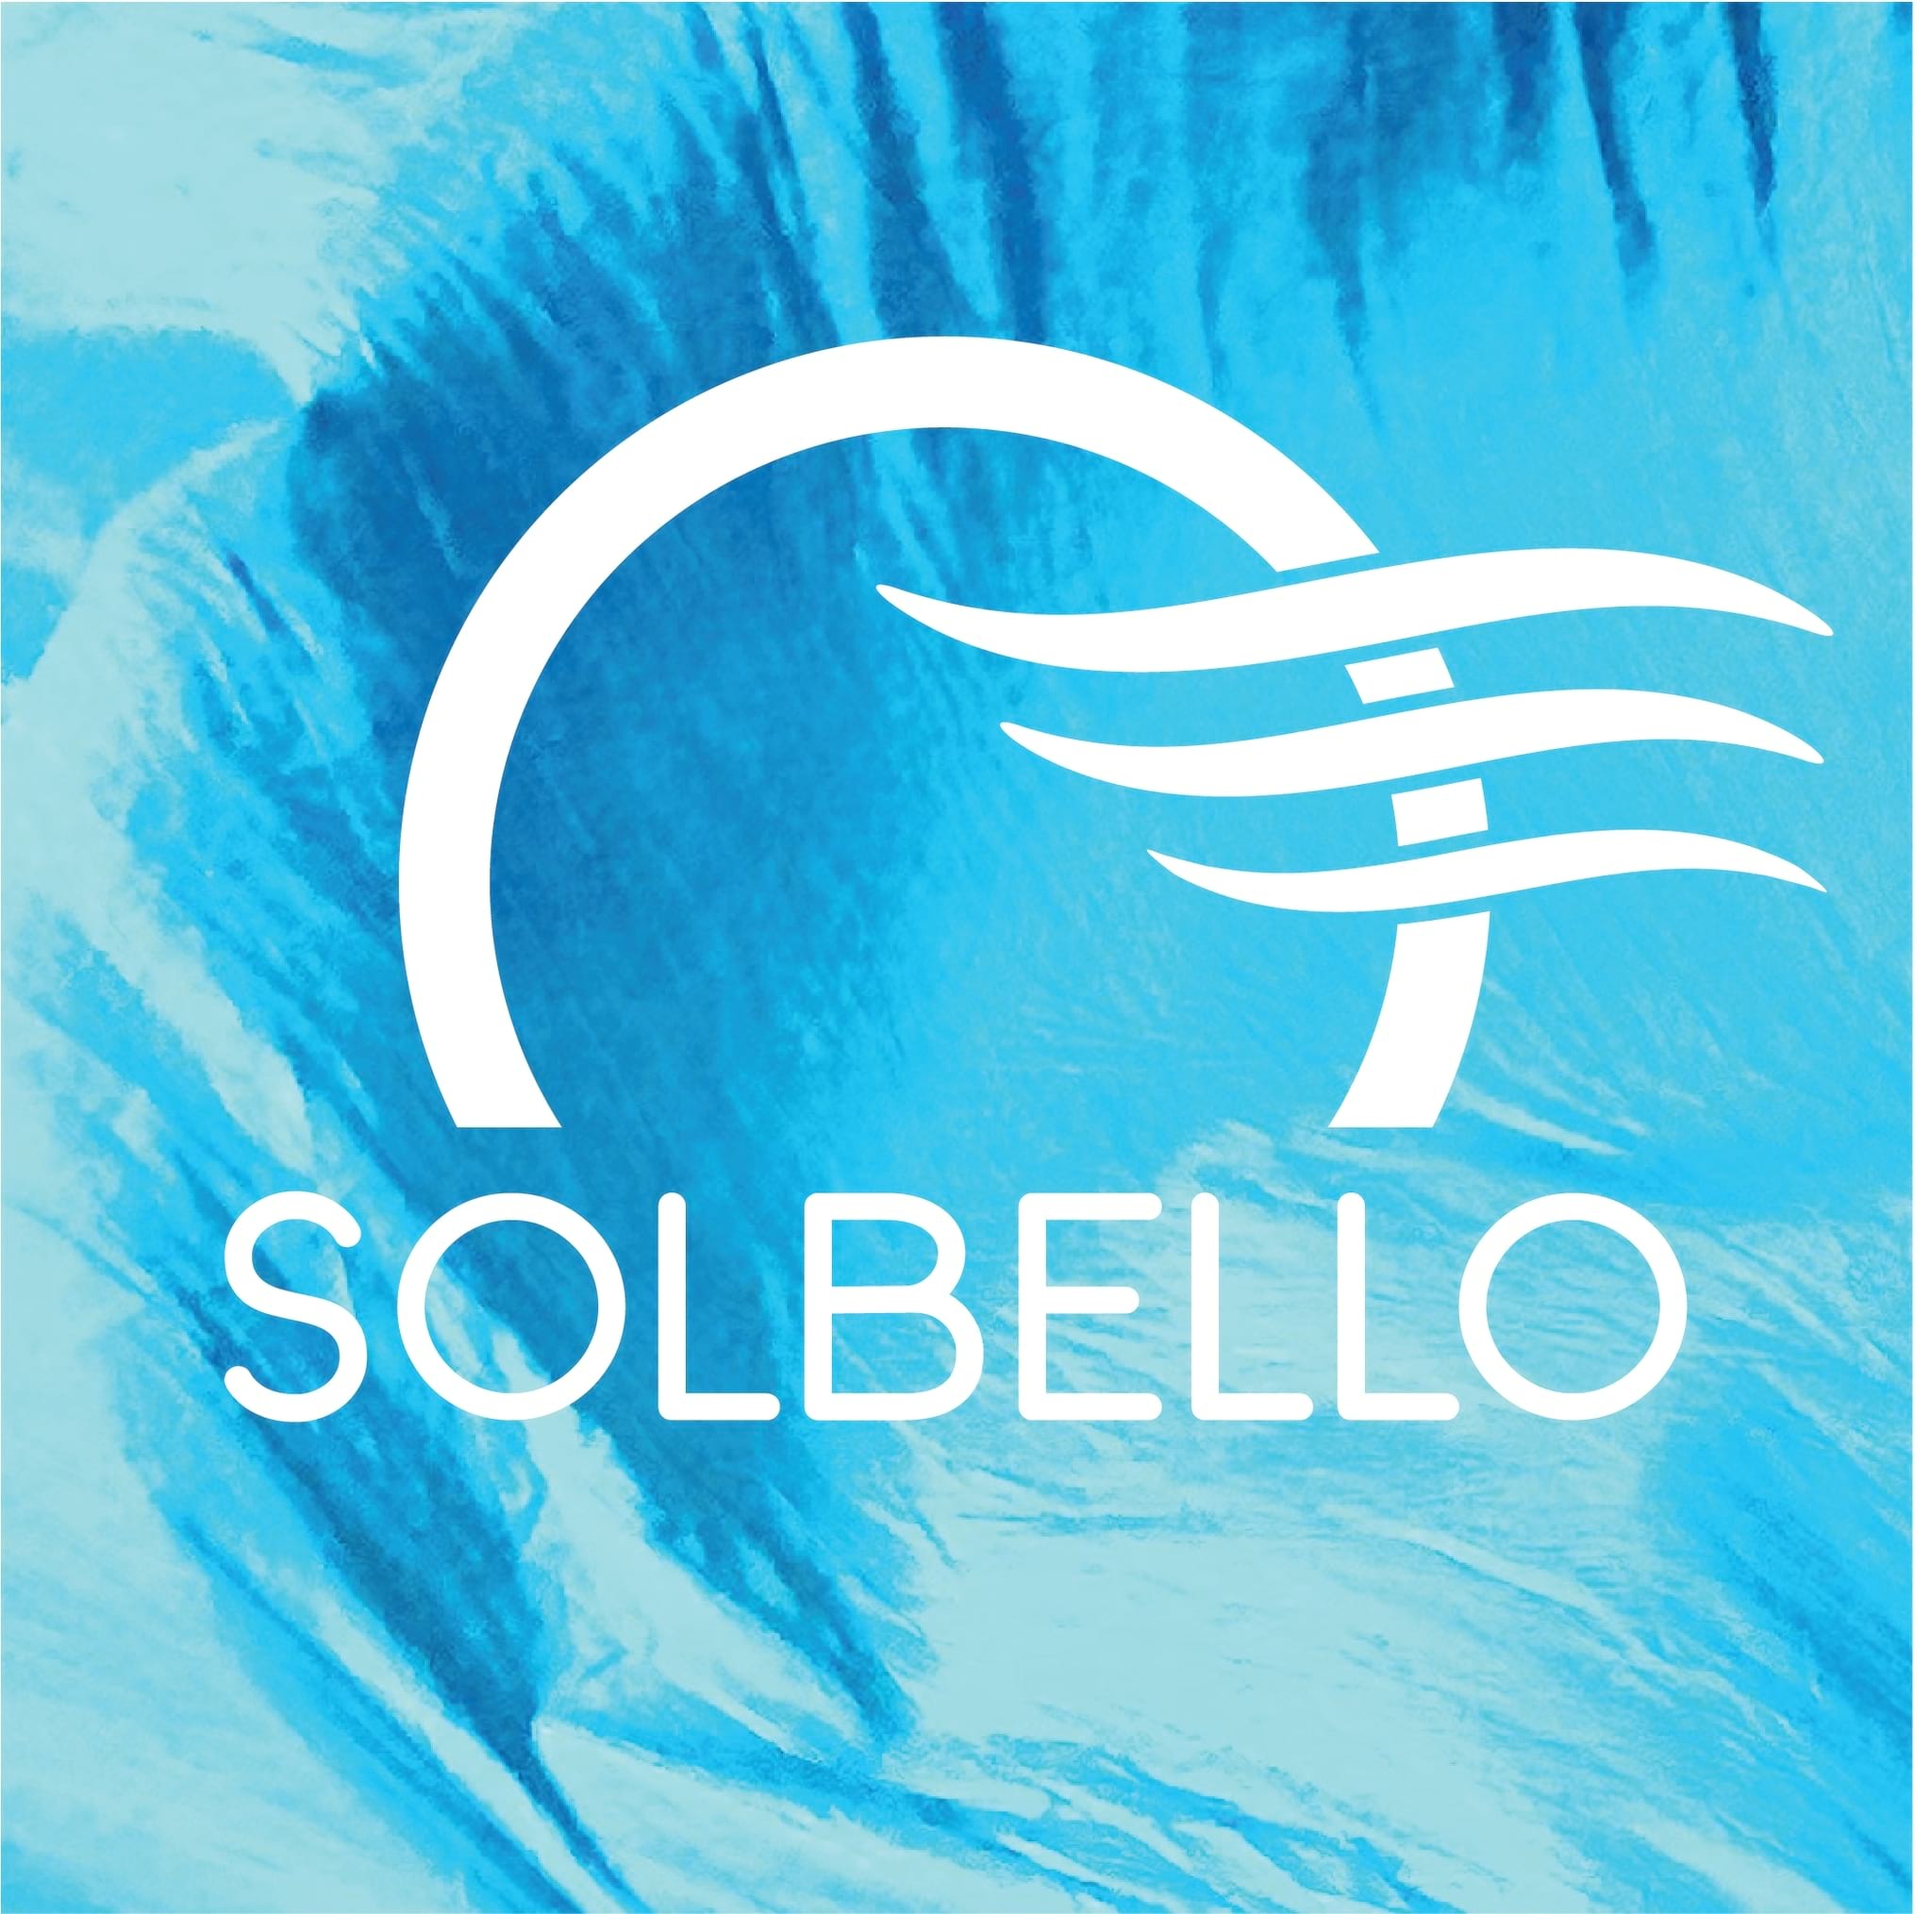 Solbello review 1